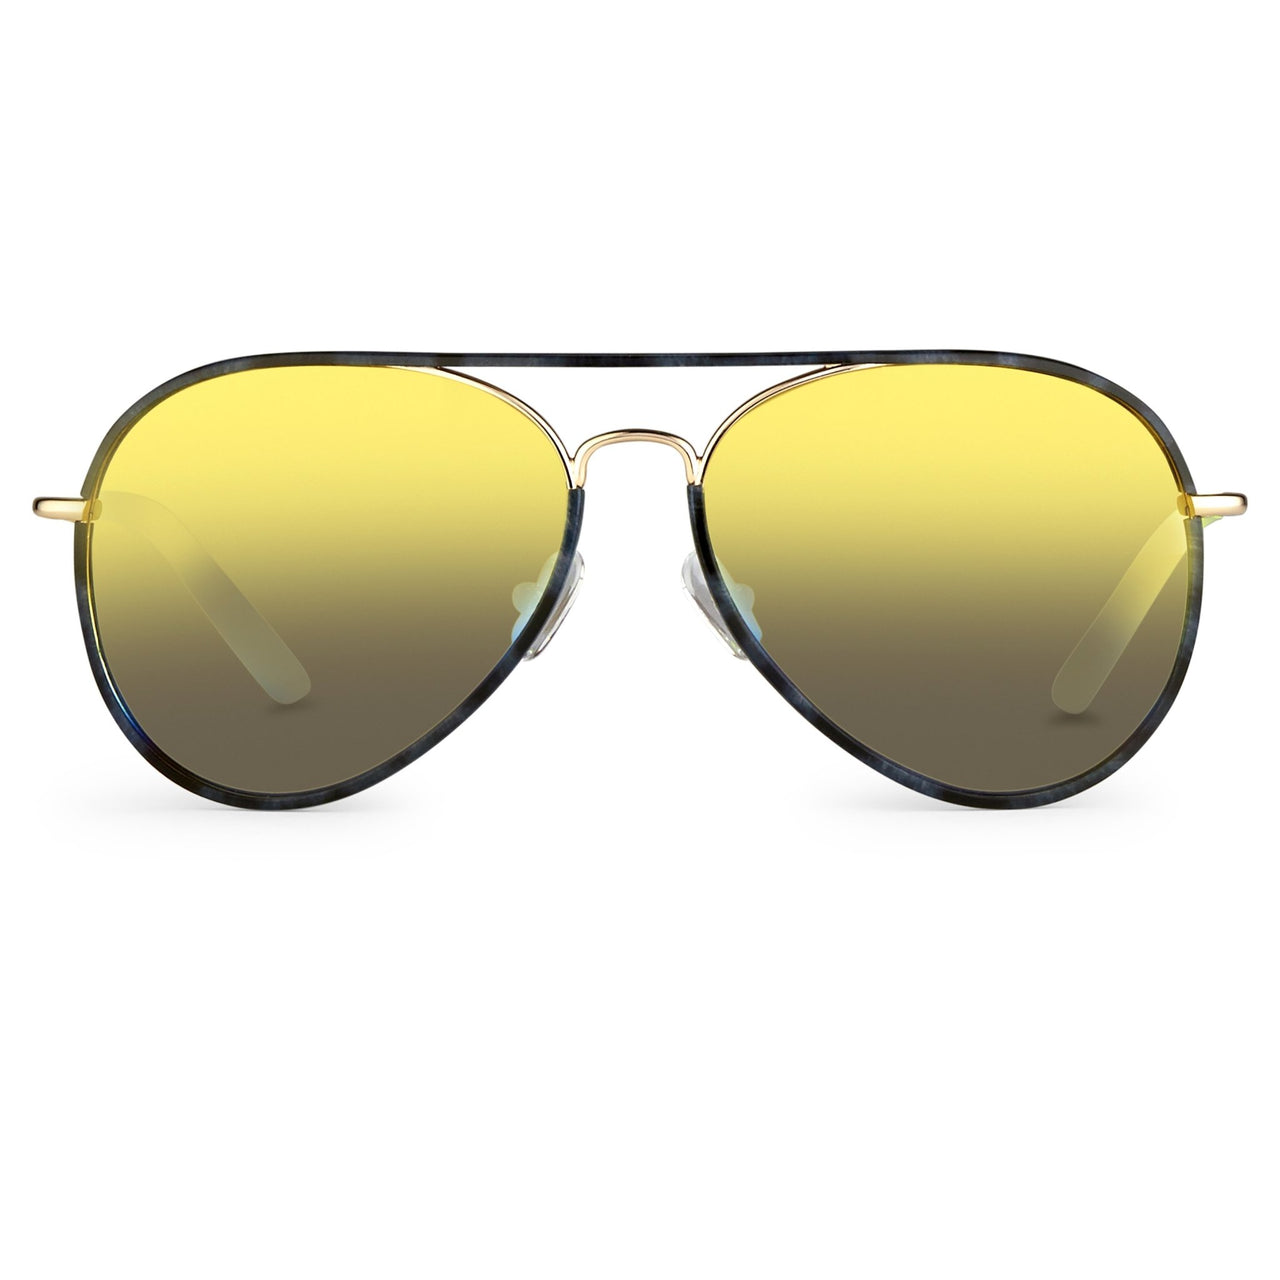 Matthew Williamson Sunglasses Tortoise Shell with Beige Lenses MW154C4SUN - Watches & Crystals